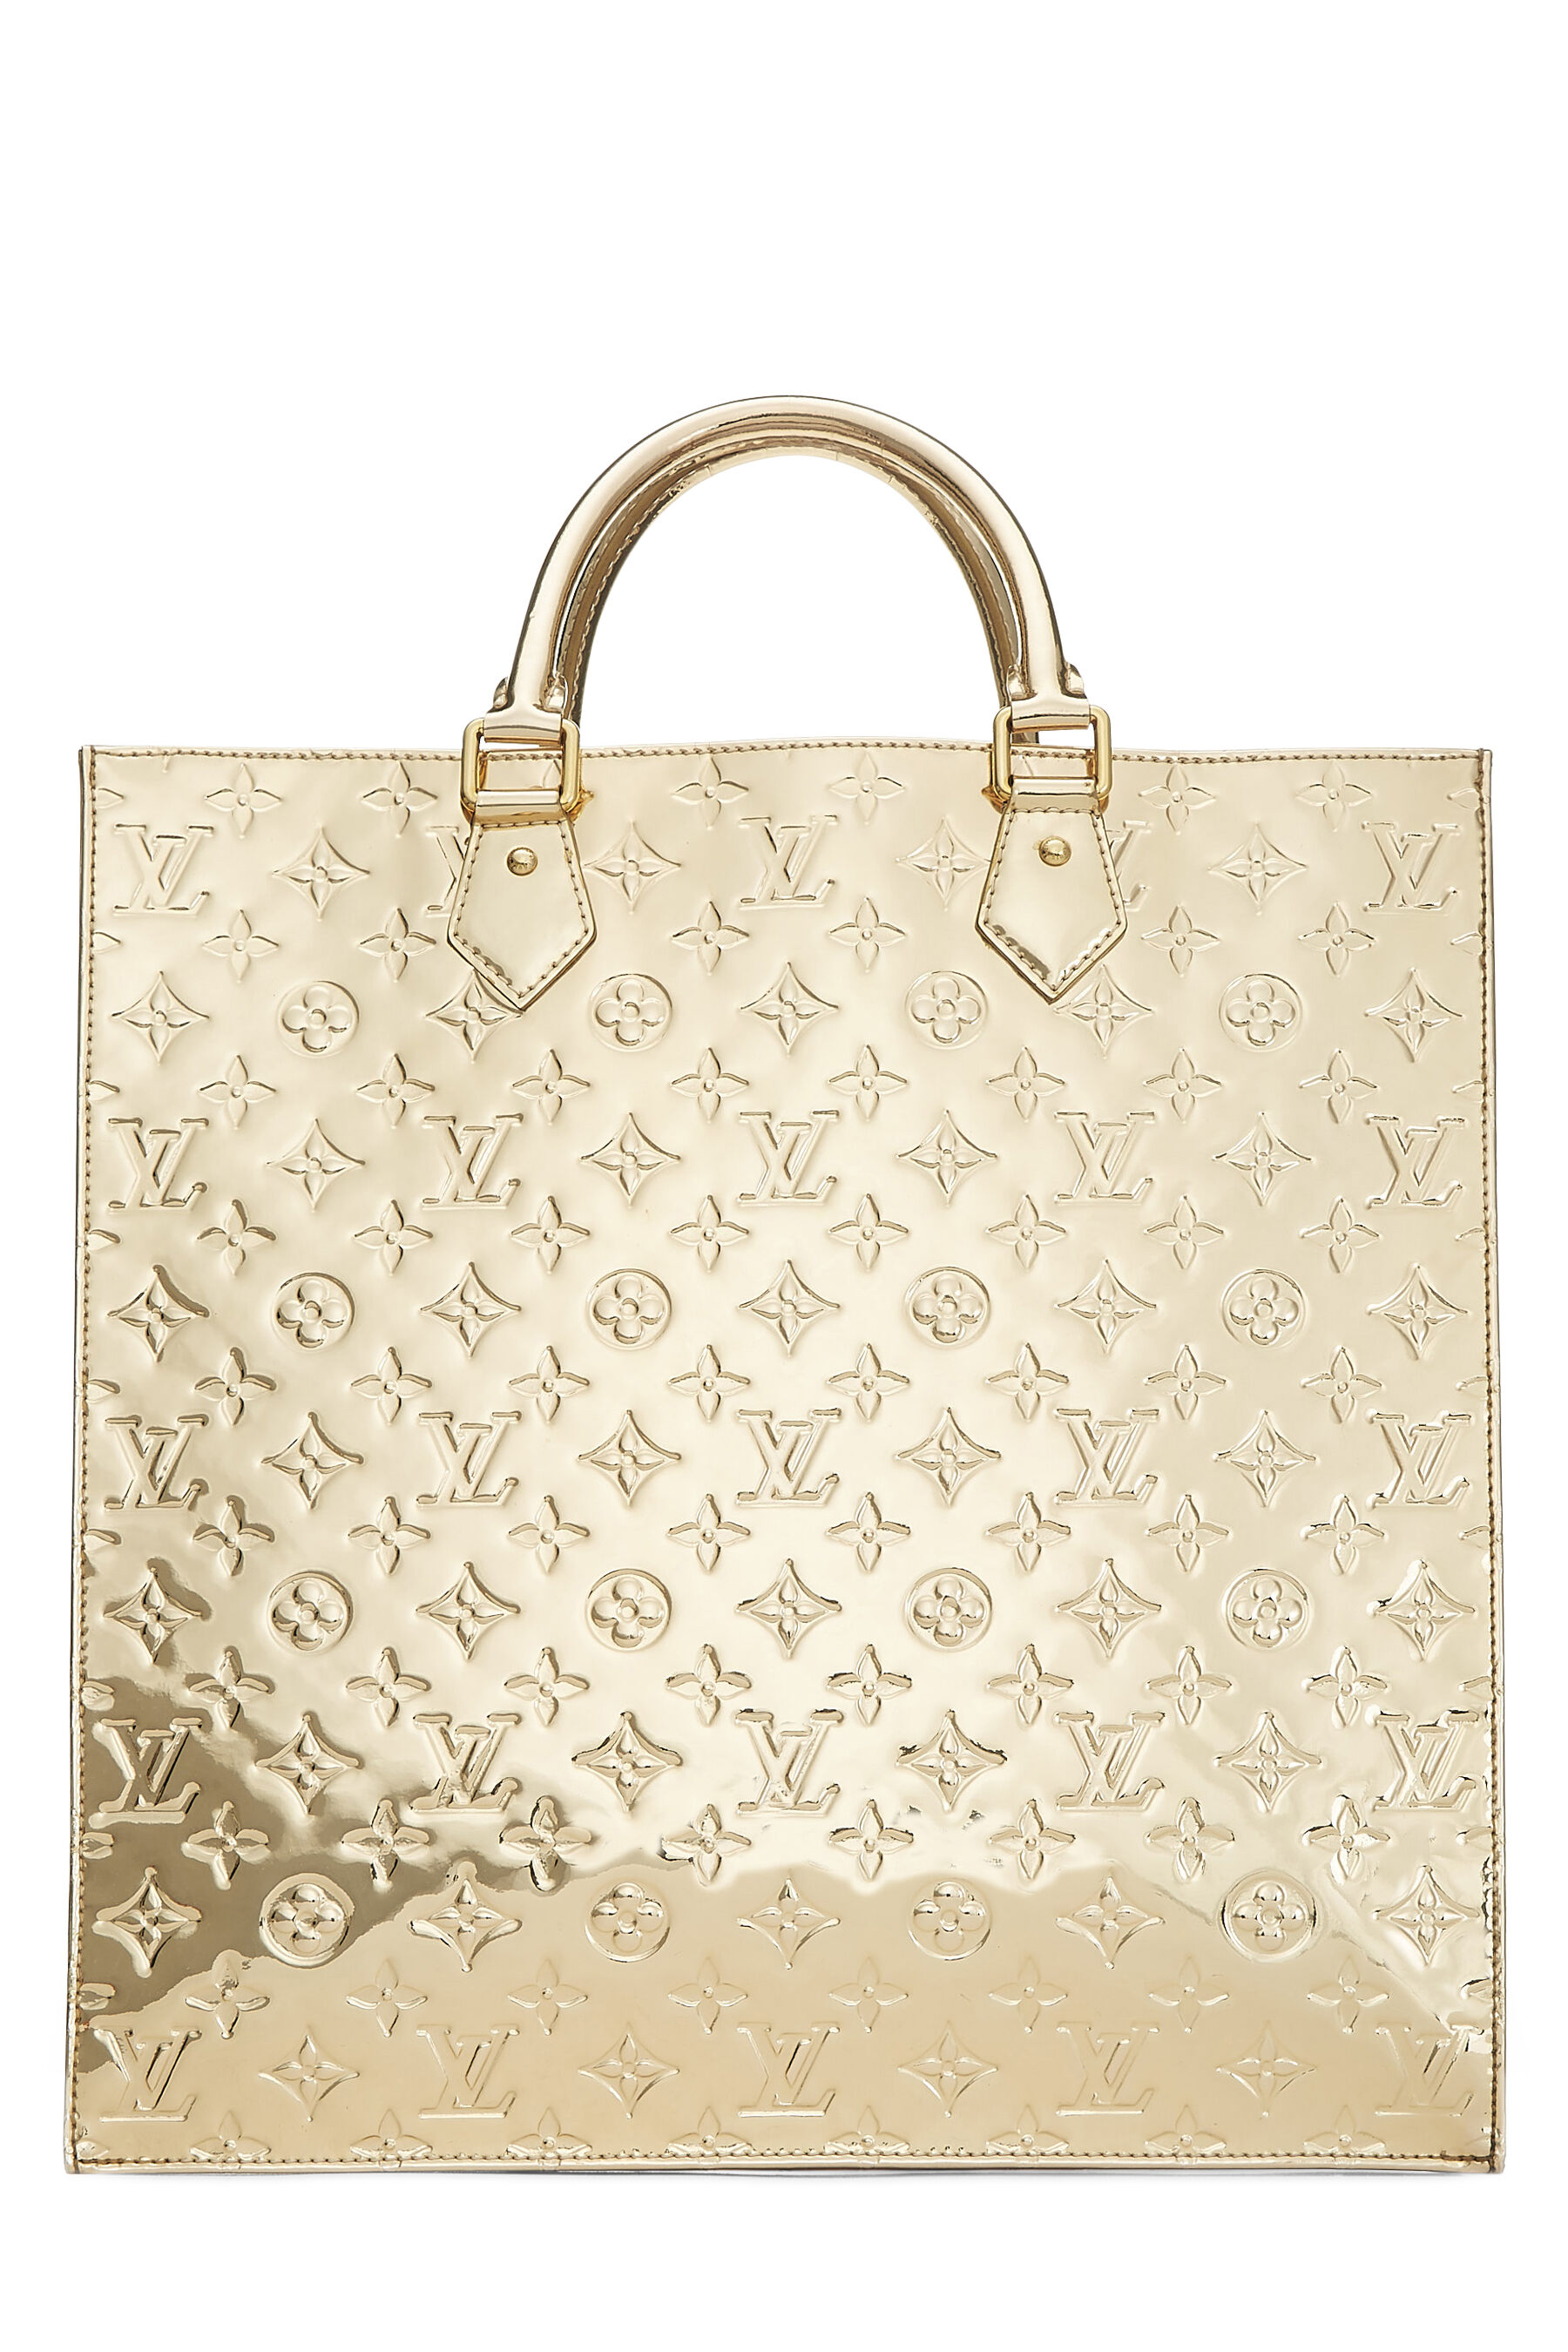 Louis Vuitton Limited Edition Gold Monogram Miroir Sac Plat Louis